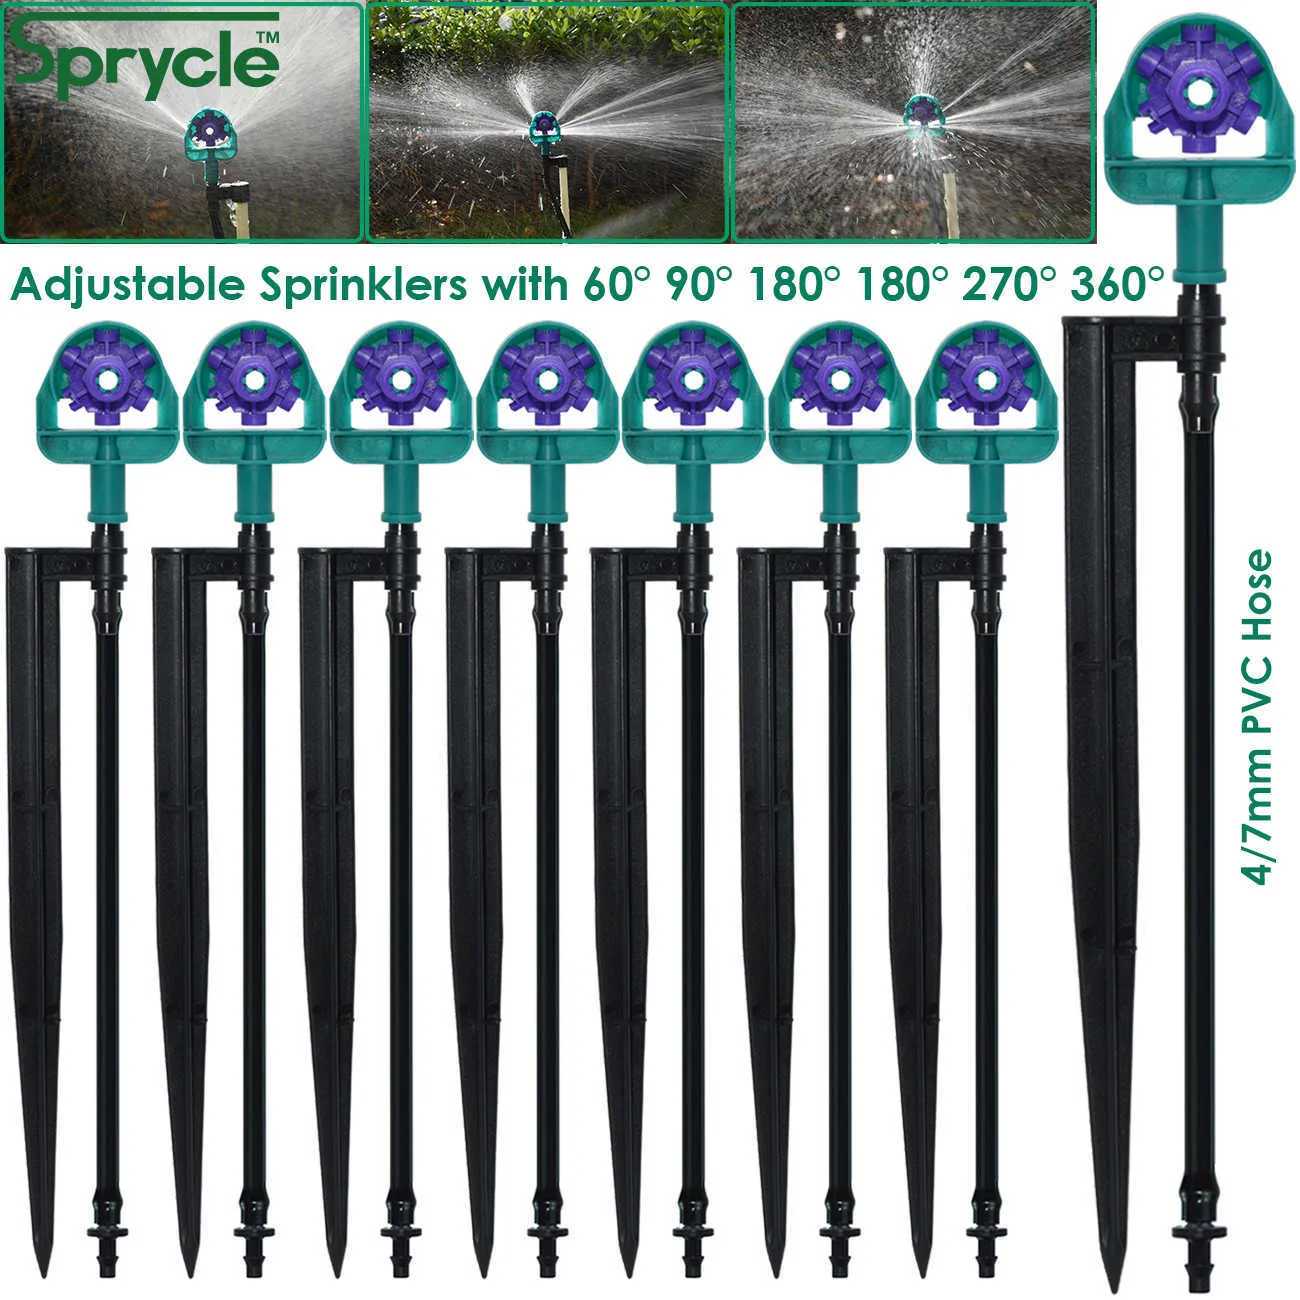 Sprycle Water Dripの灌漑調節可能なスプリンクラー60/90/180/270/360鉢植えの植物の植物の庭のツール210610